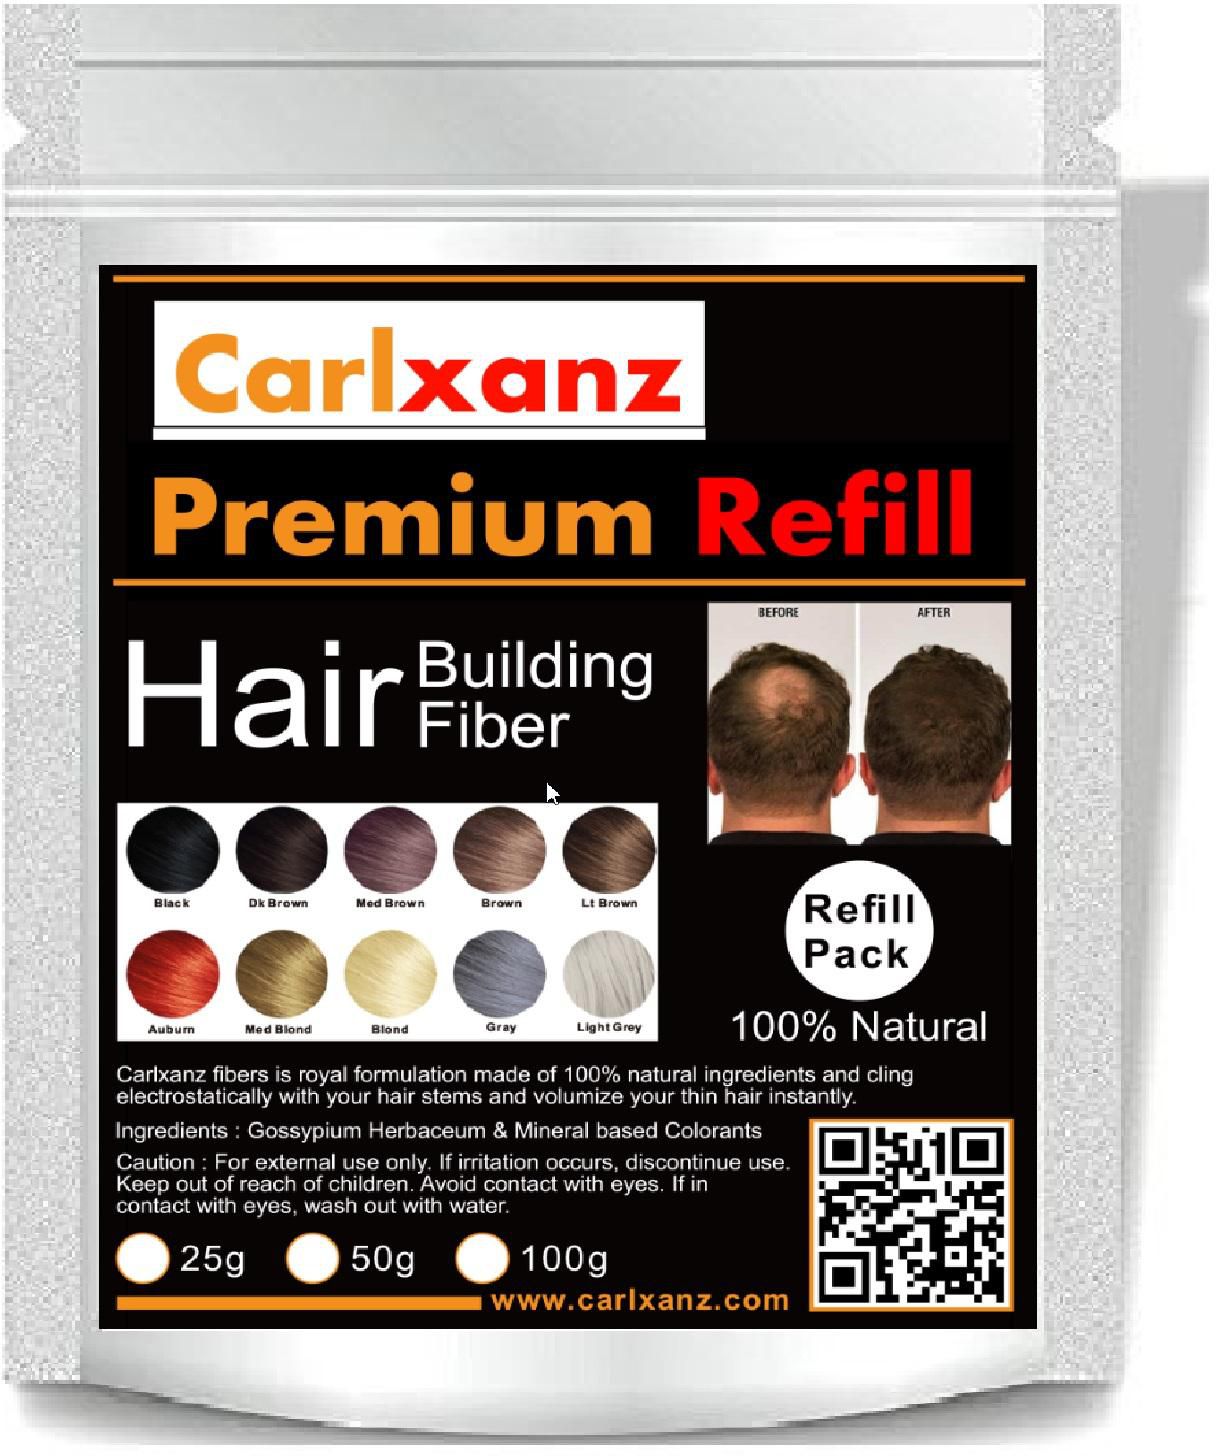 Carlxanz Hair Building Fiber Refill Pack Caboki Toppik Equivalent 25 g / 0.88 oz (Medium Brown)